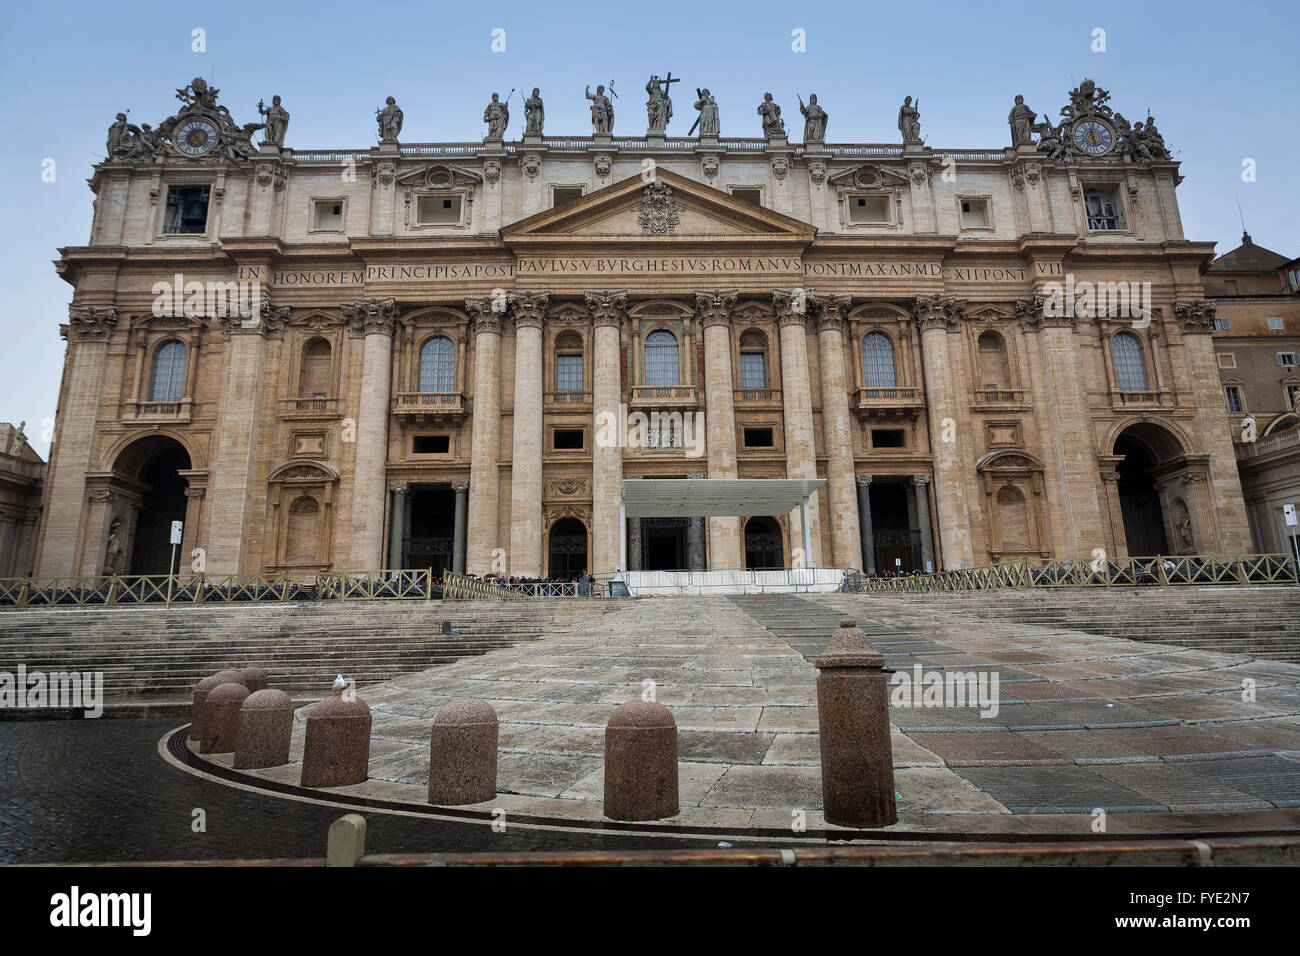 Saint Peter’s basilica. Rome, Italy Stock Photo